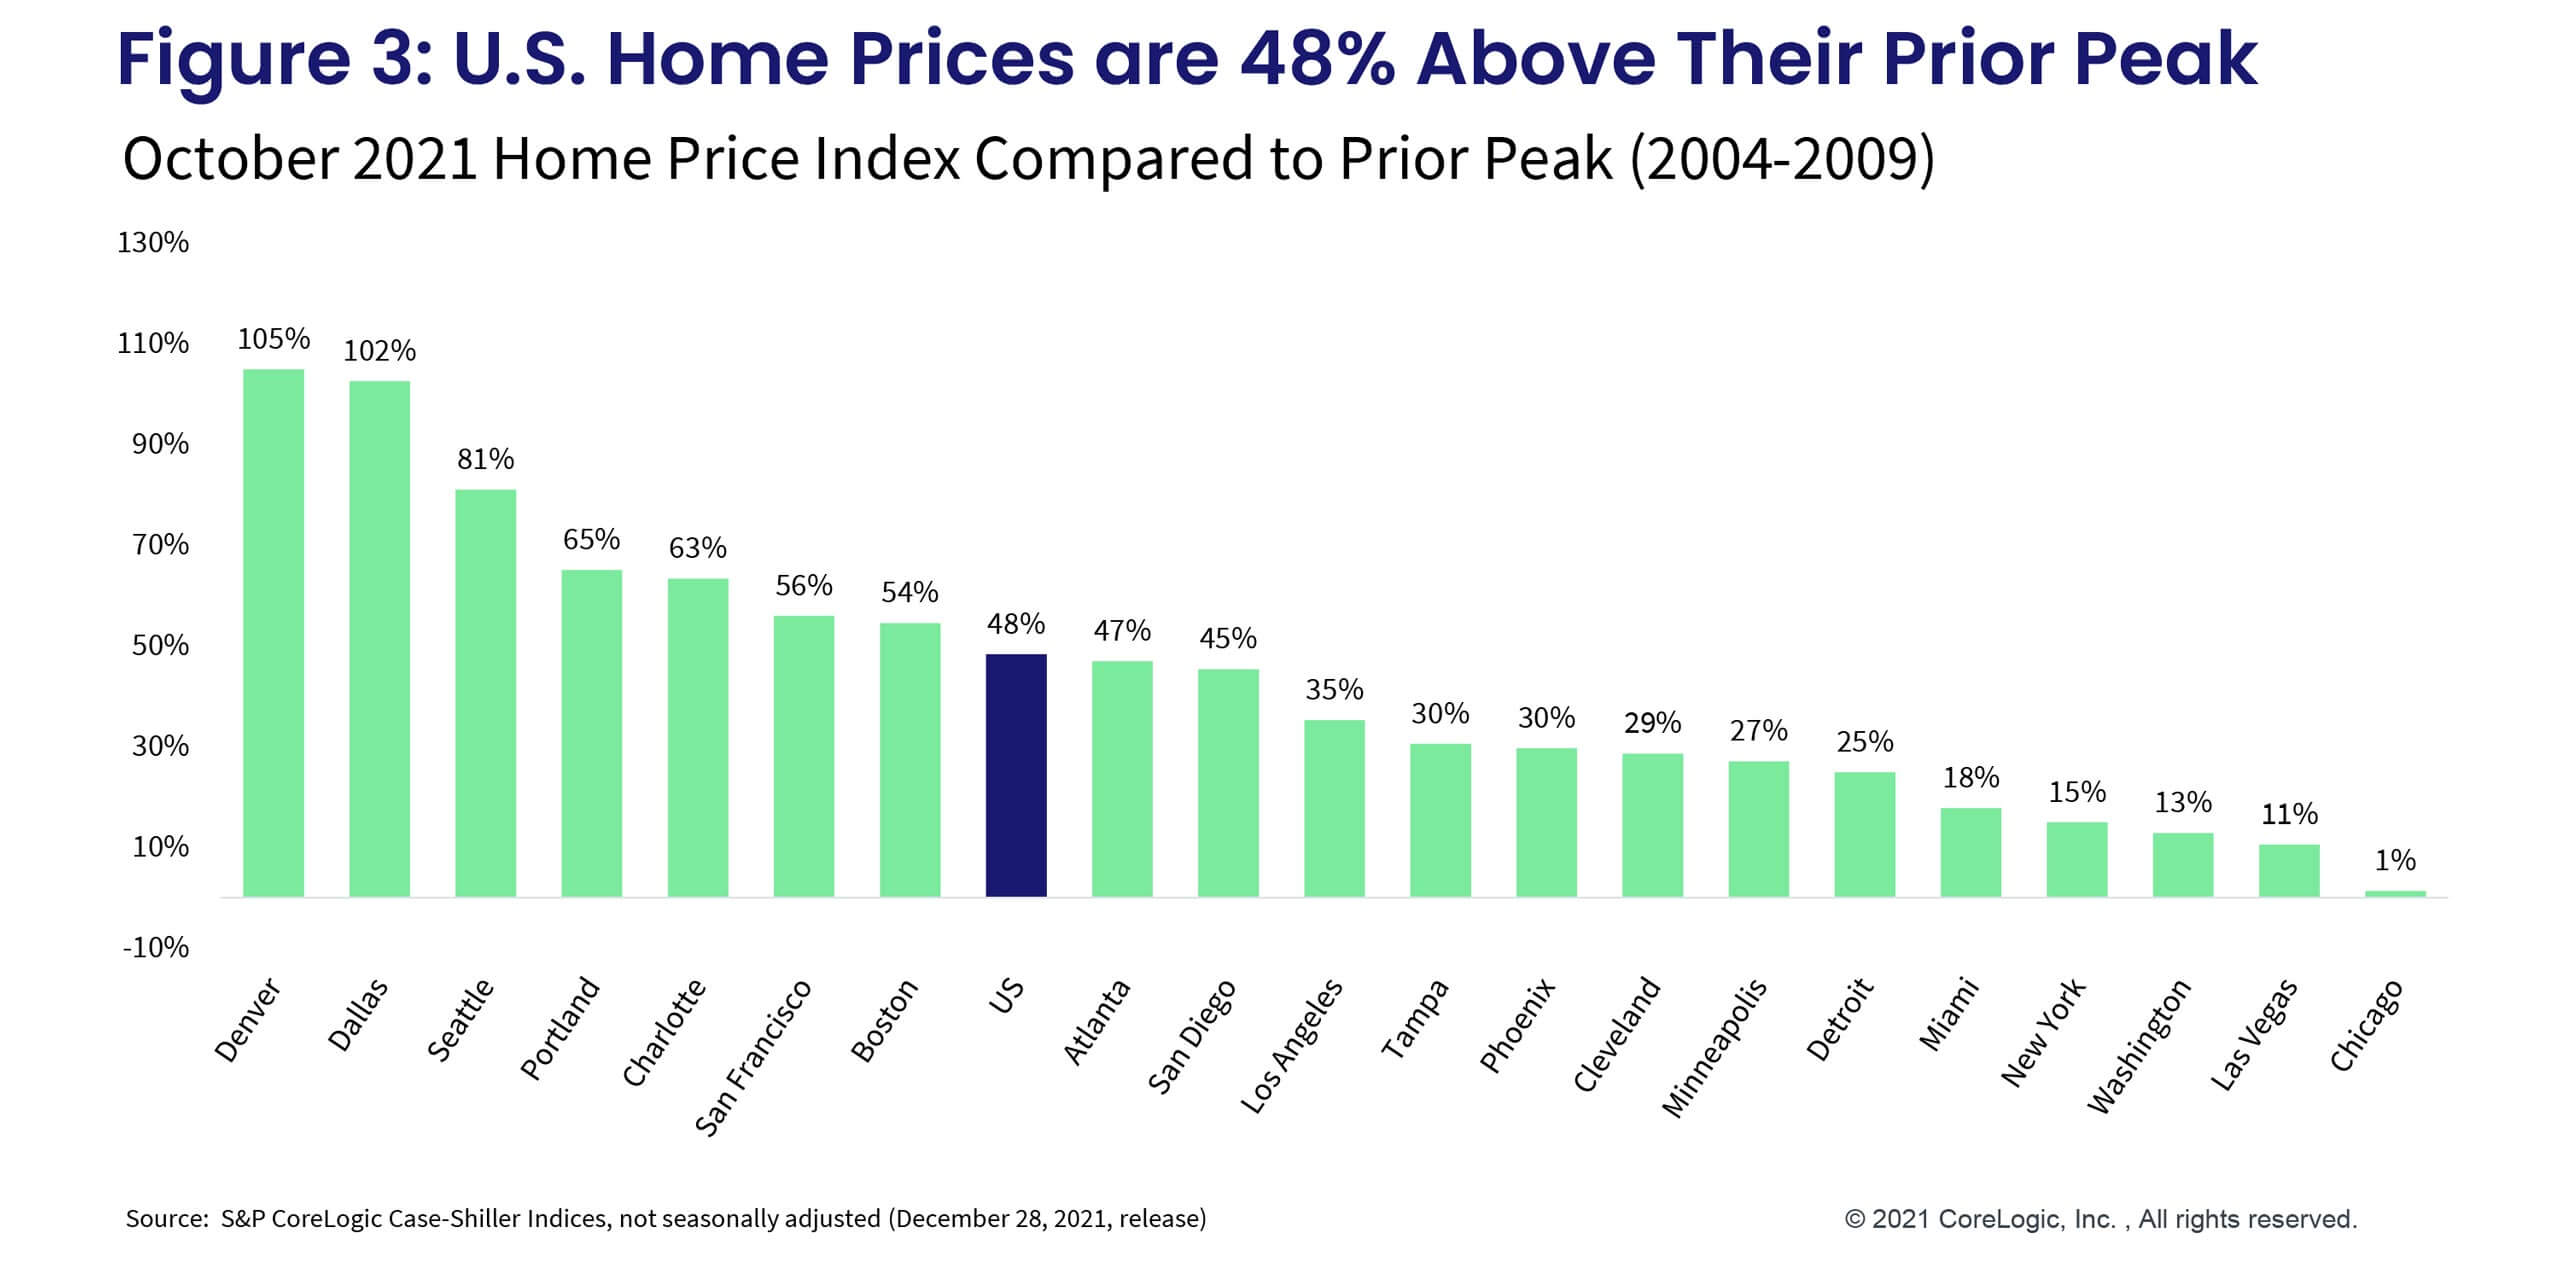 Figure 3: U.S. Home Prices are 48% Above Their Prior Peak